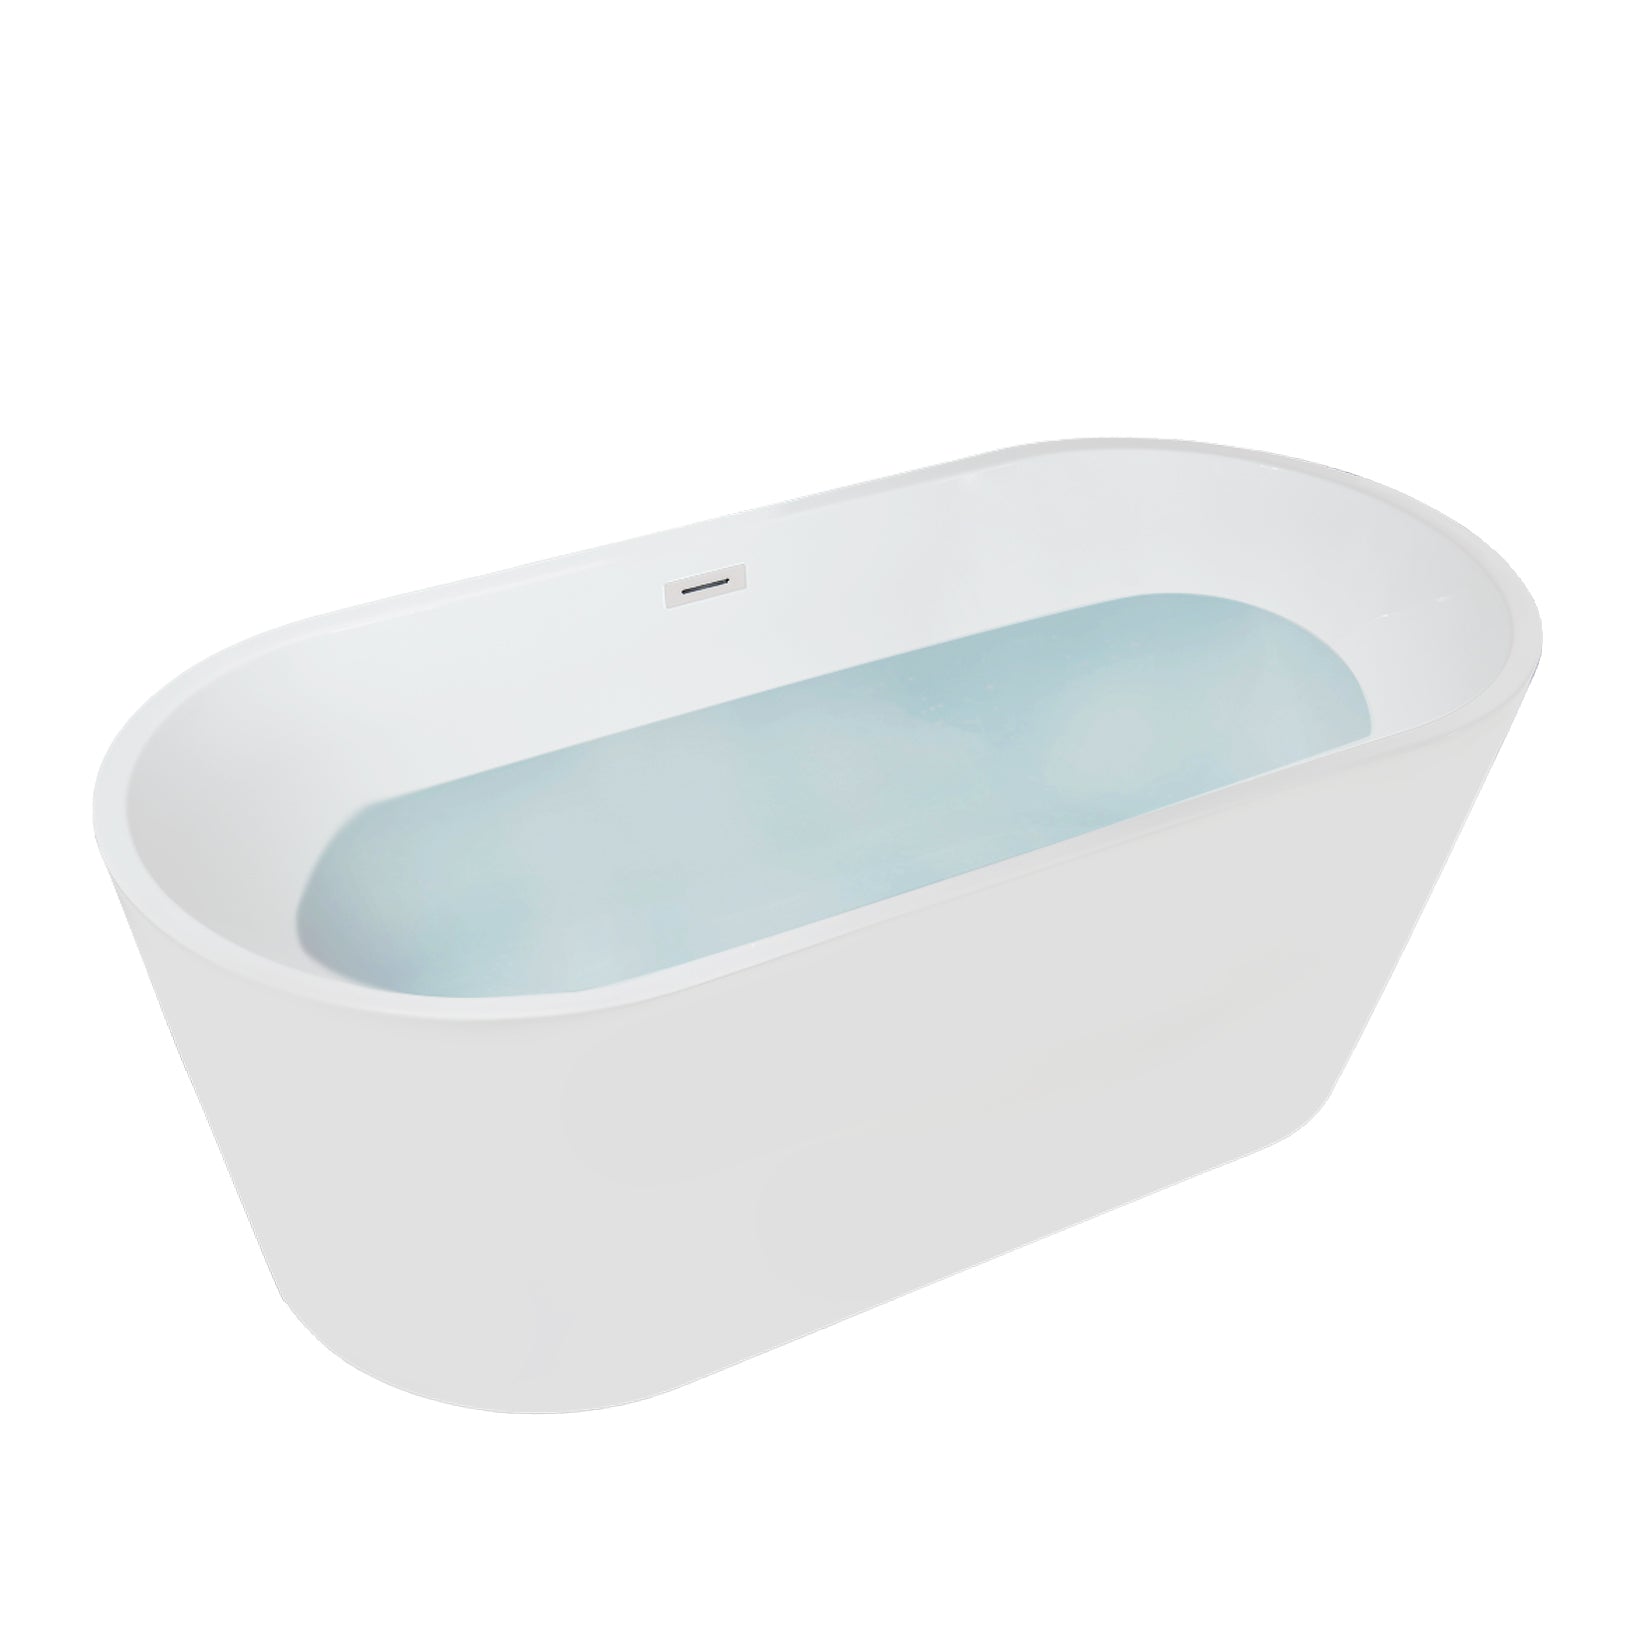 Bell + Modern Bathtubs and Tub Fillers Montserrat in White Freestanding Acrylic Flatbottom Soaking Bathtub